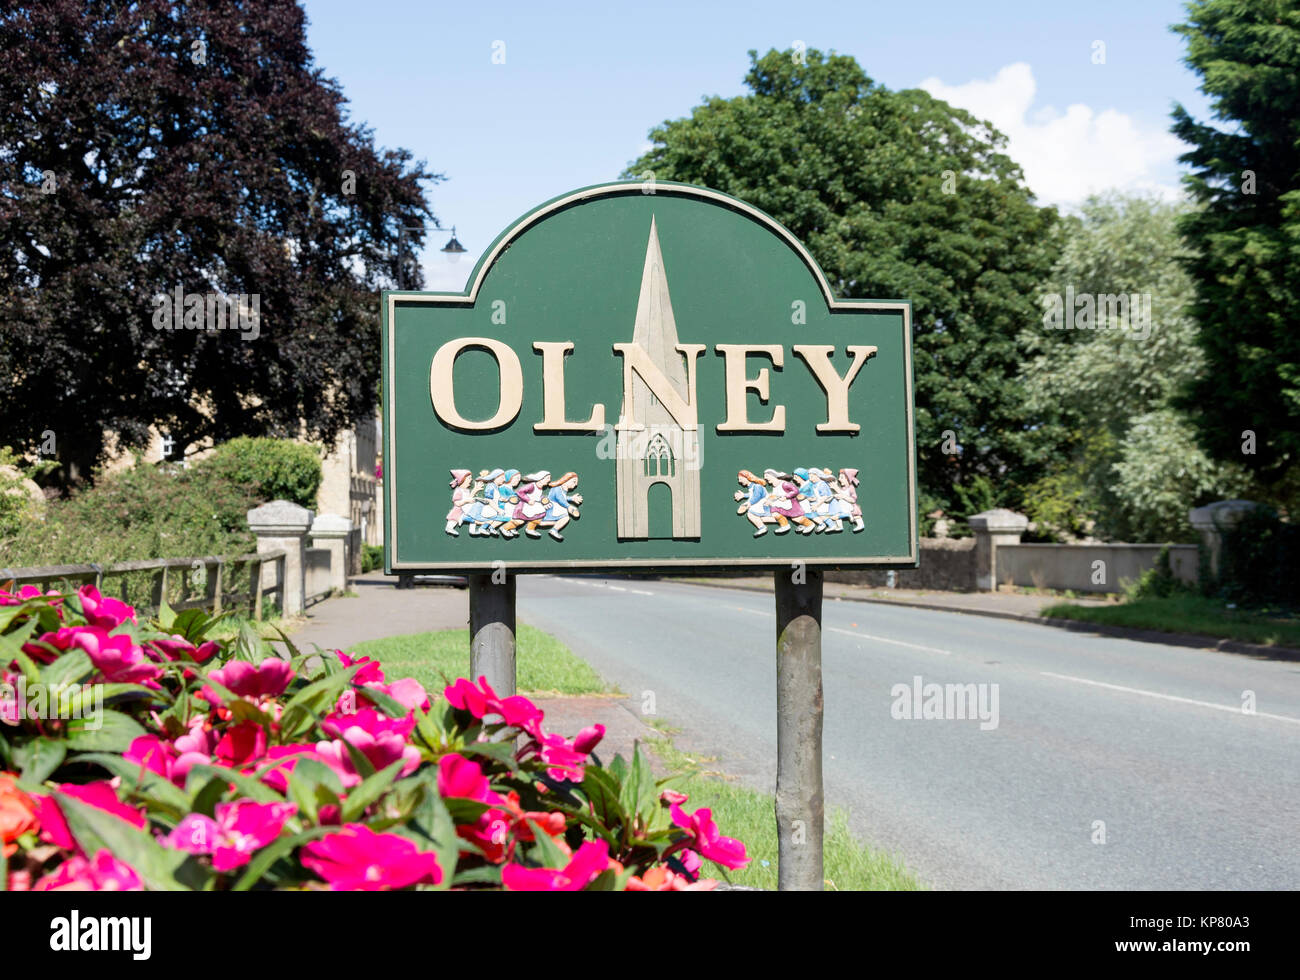 Entrata al paese segno, Bridge Street, Olney, Buckinghamshire, Inghilterra, Regno Unito Foto Stock